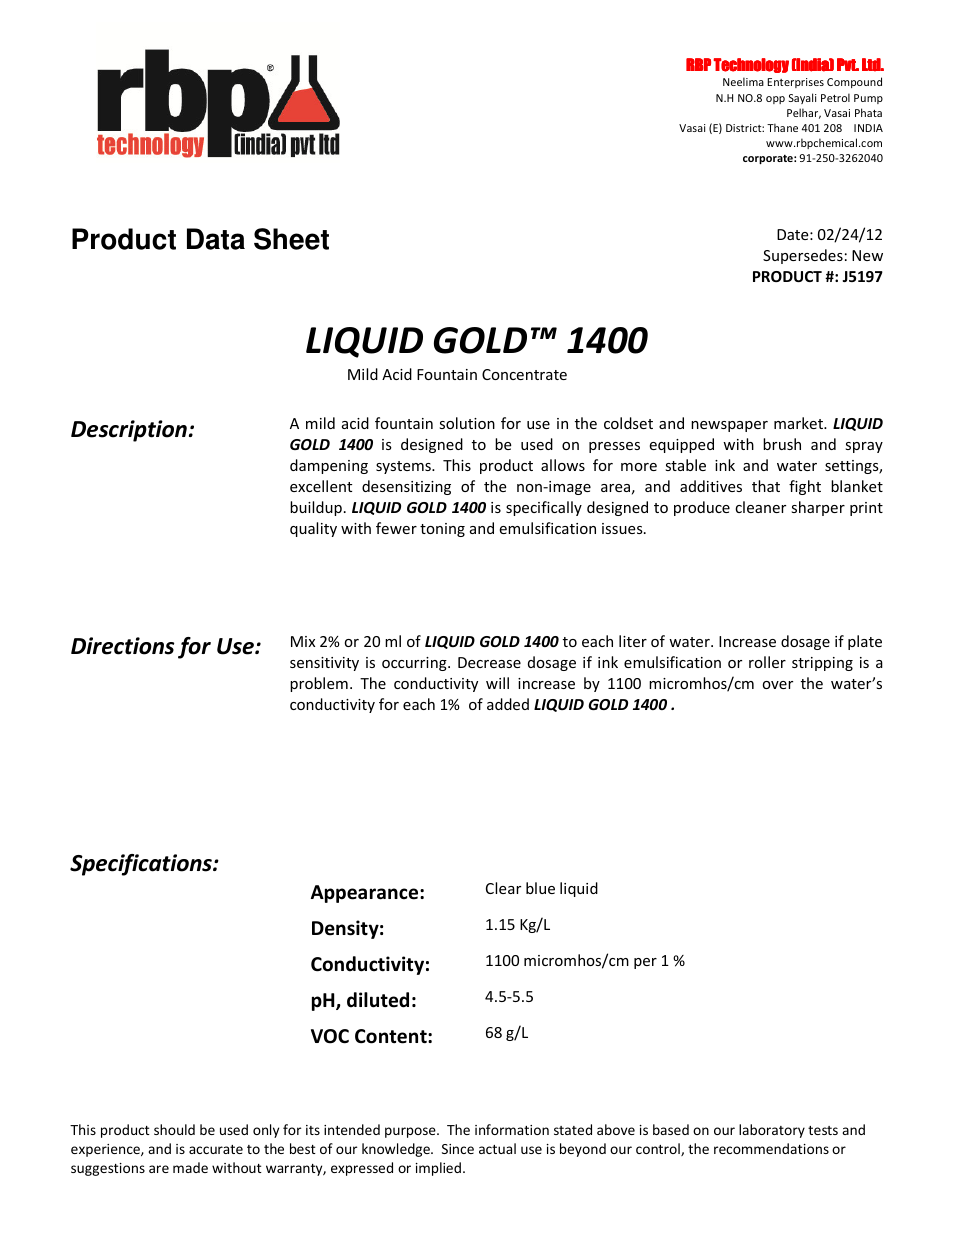 J5197 LIQUID GOLD 1400